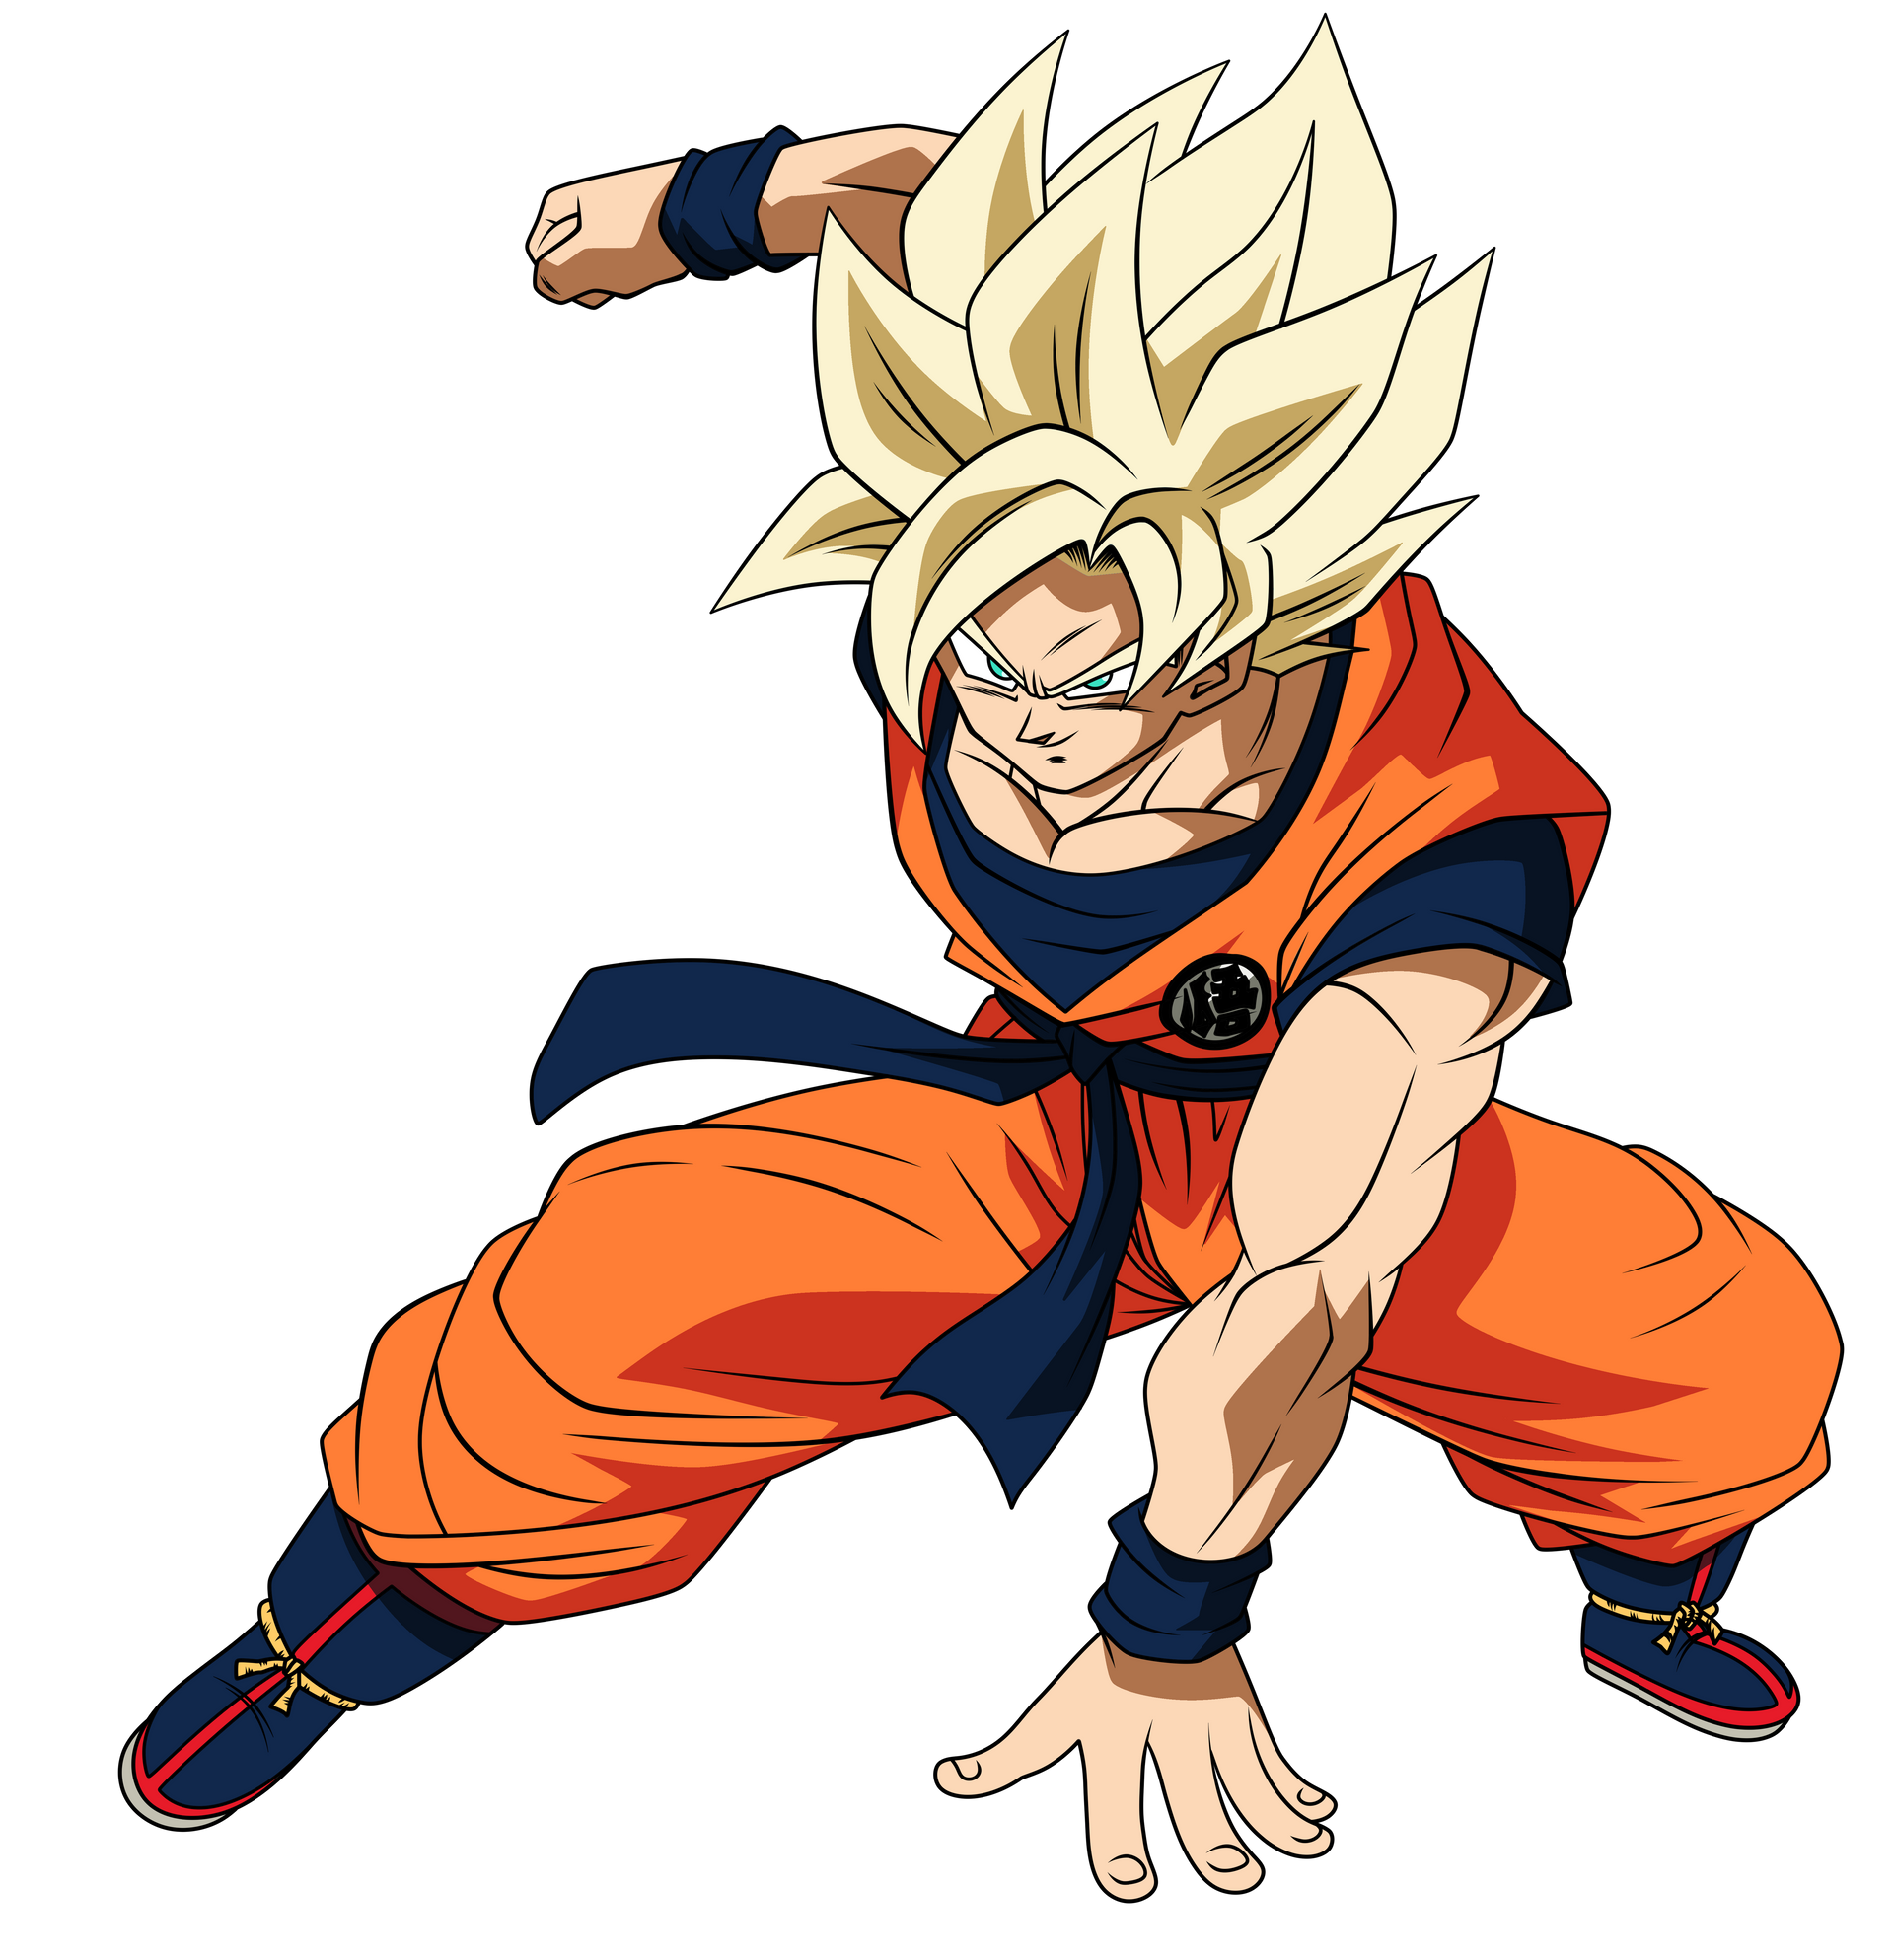 Super Saiyan 2 Goku Version 2 by BrusselTheSaiyan on DeviantArt  Anime  dragon ball super, Dragon ball super goku, Anime dragon ball